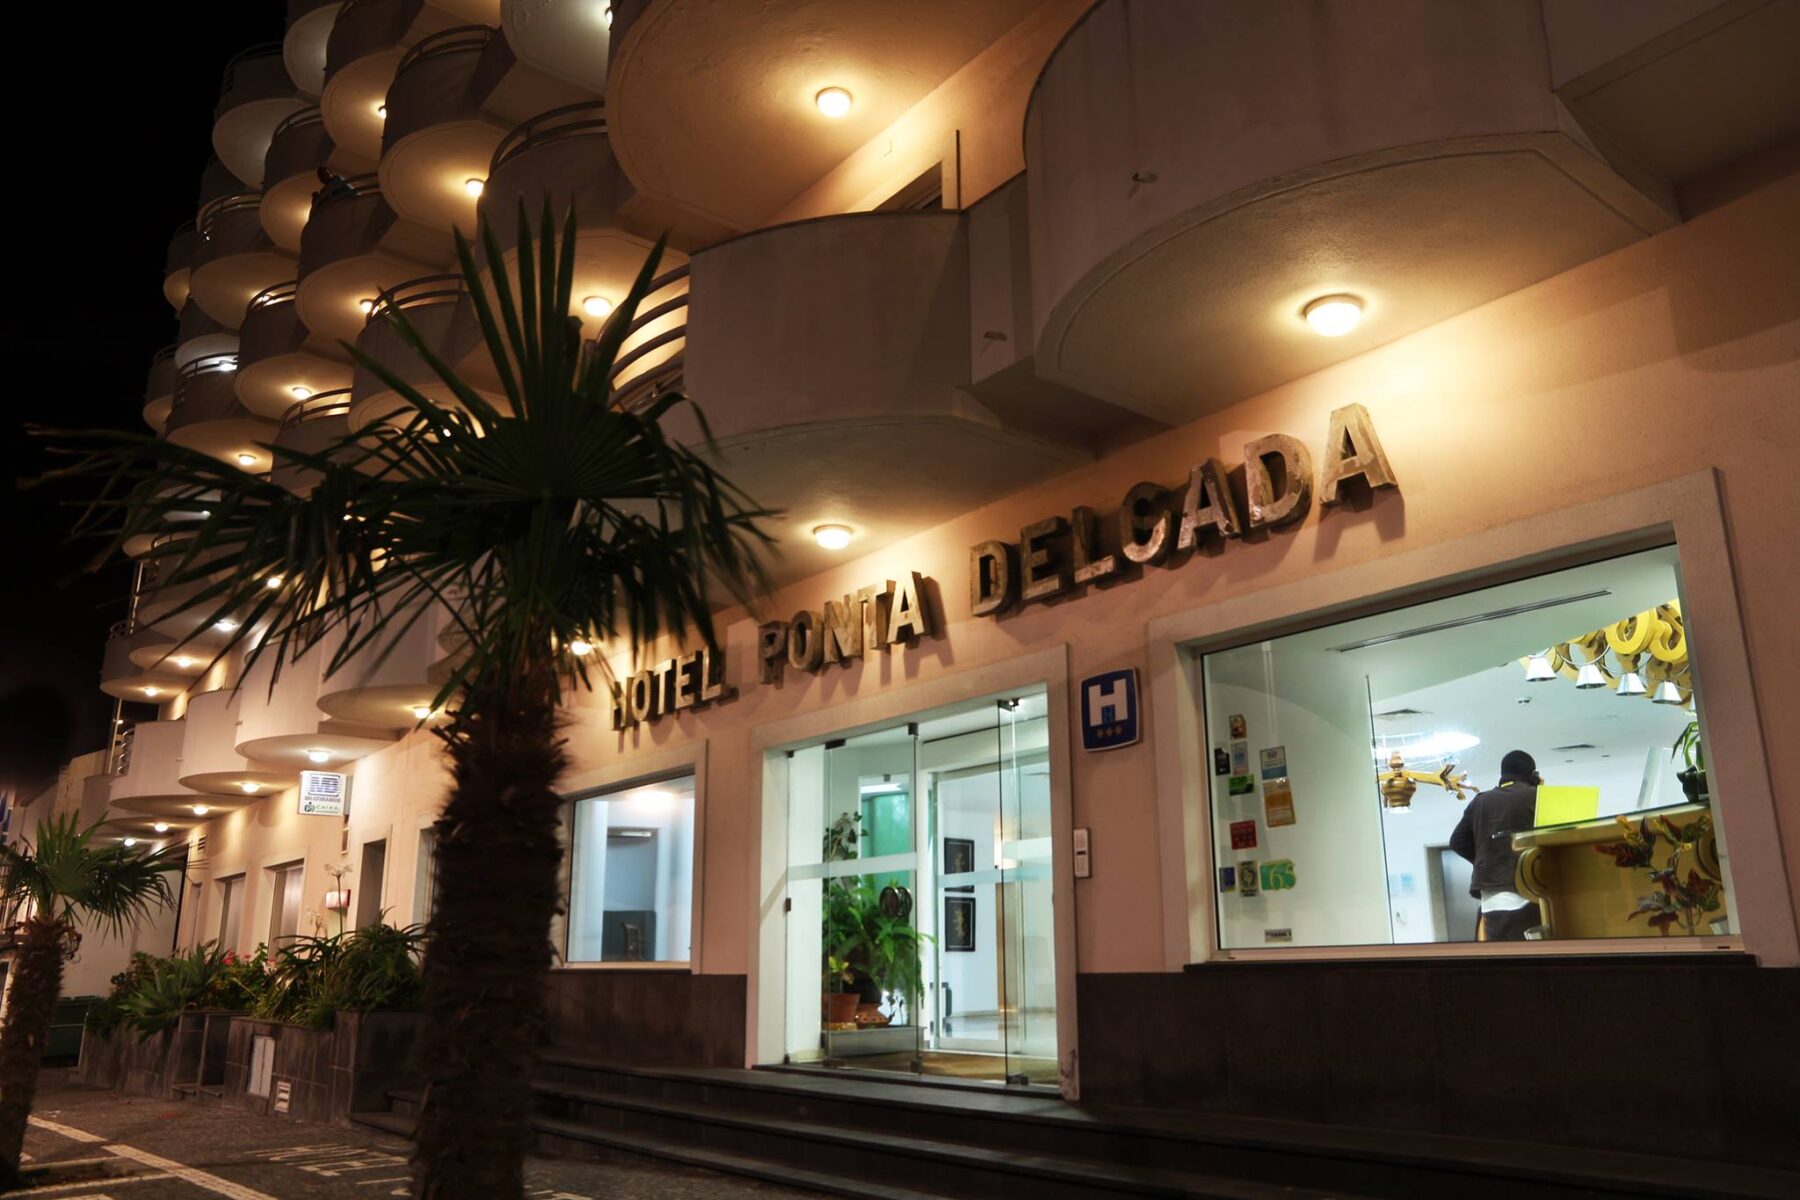 Hotel Ponta Delgada Acores 1800x1200 